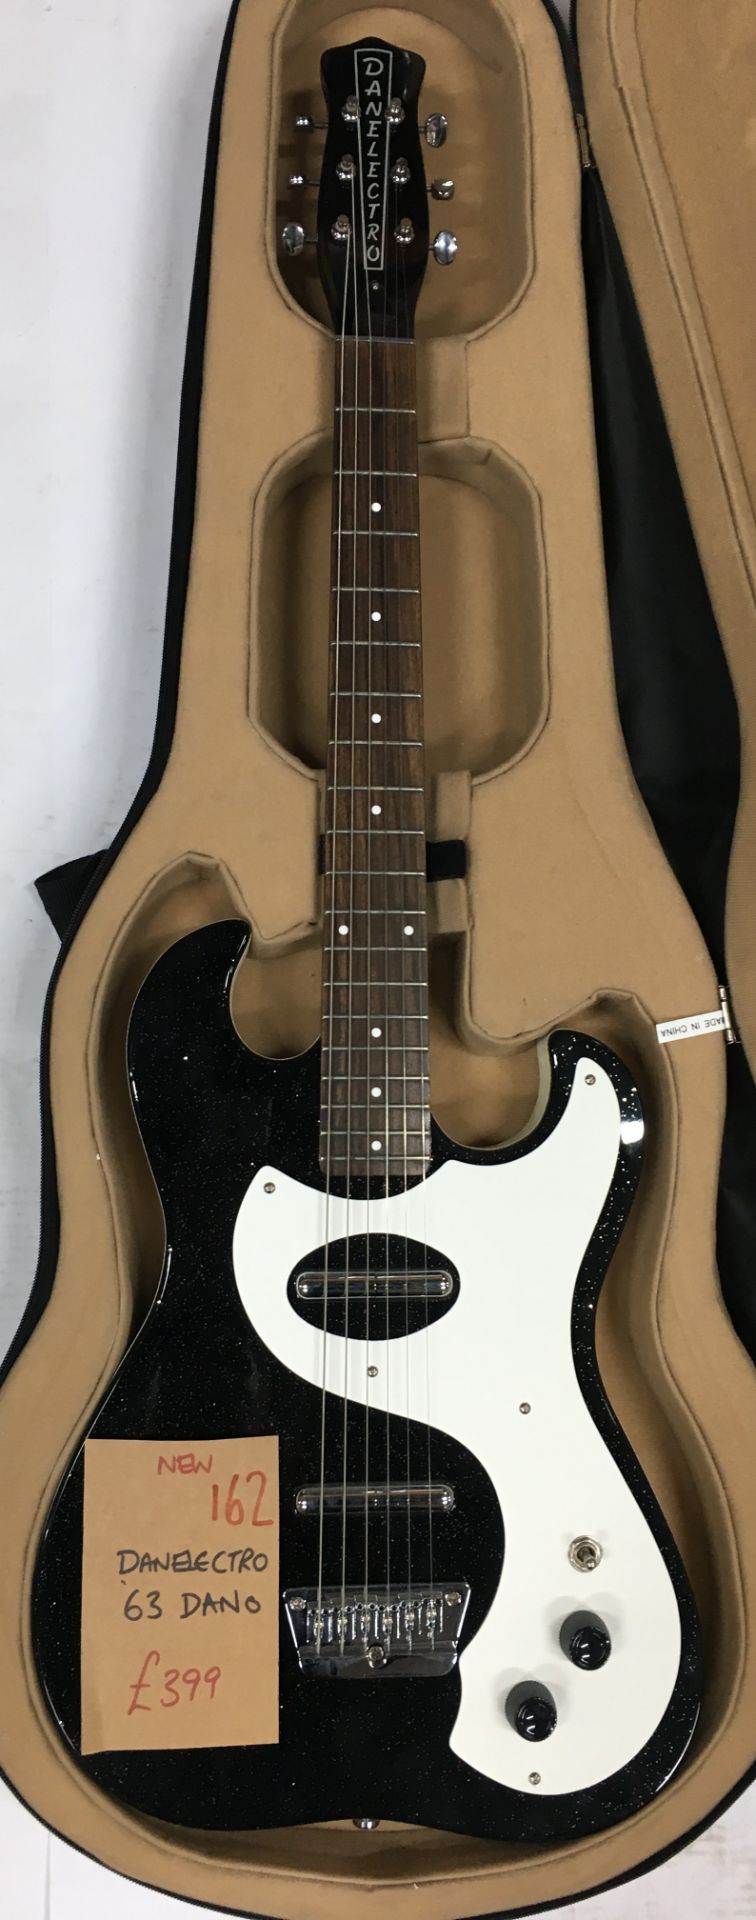 Danelectro '63 Dano Electric Guitar in Black Sparkle | RRP £399 - Image 2 of 4